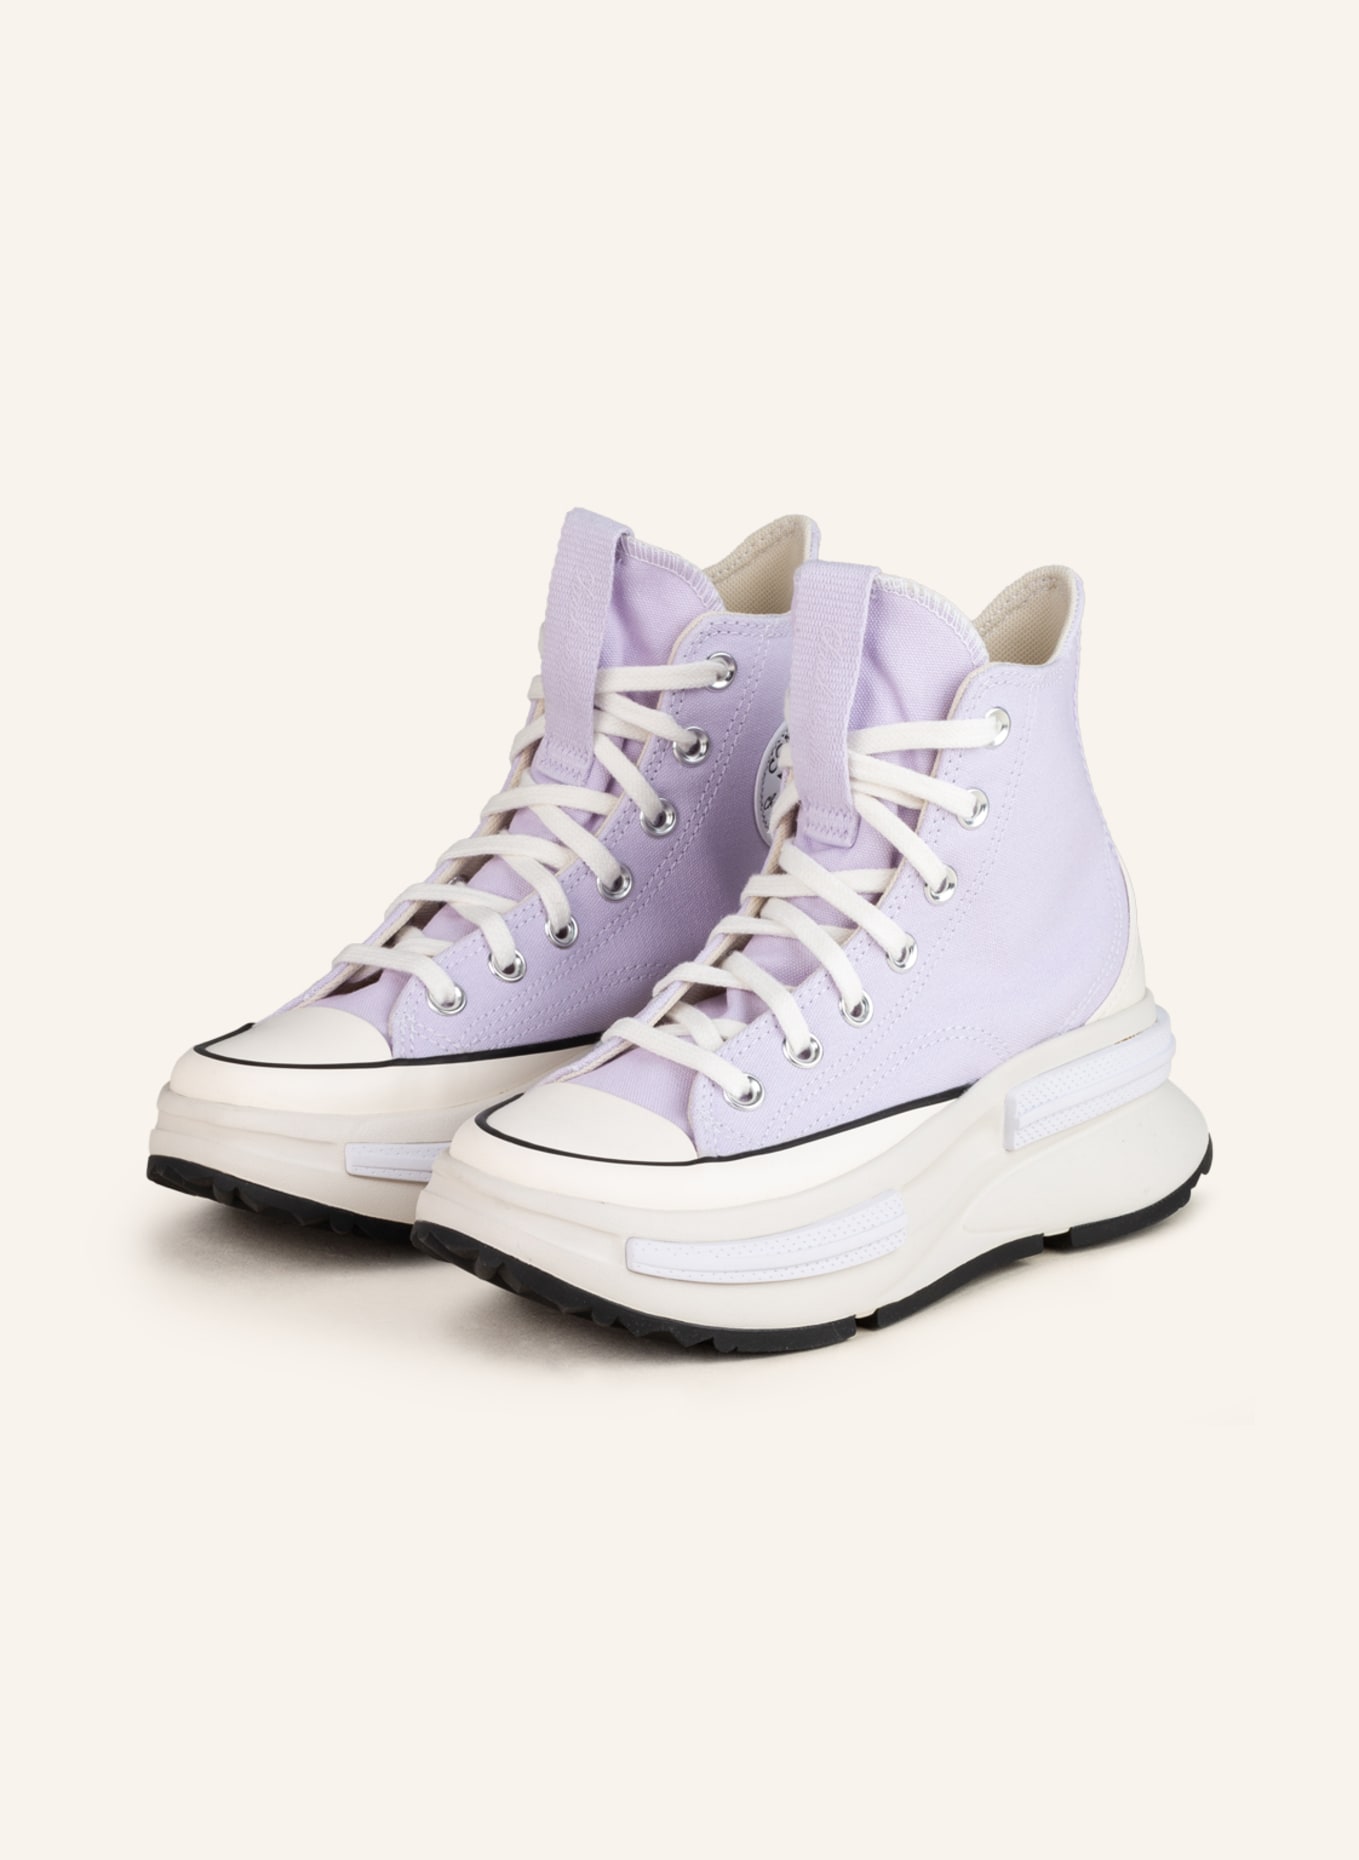 CONVERSE Hightop-Sneaker RUN STAR LEGACY, Farbe: HELLLILA/ WEISS (Bild 1)